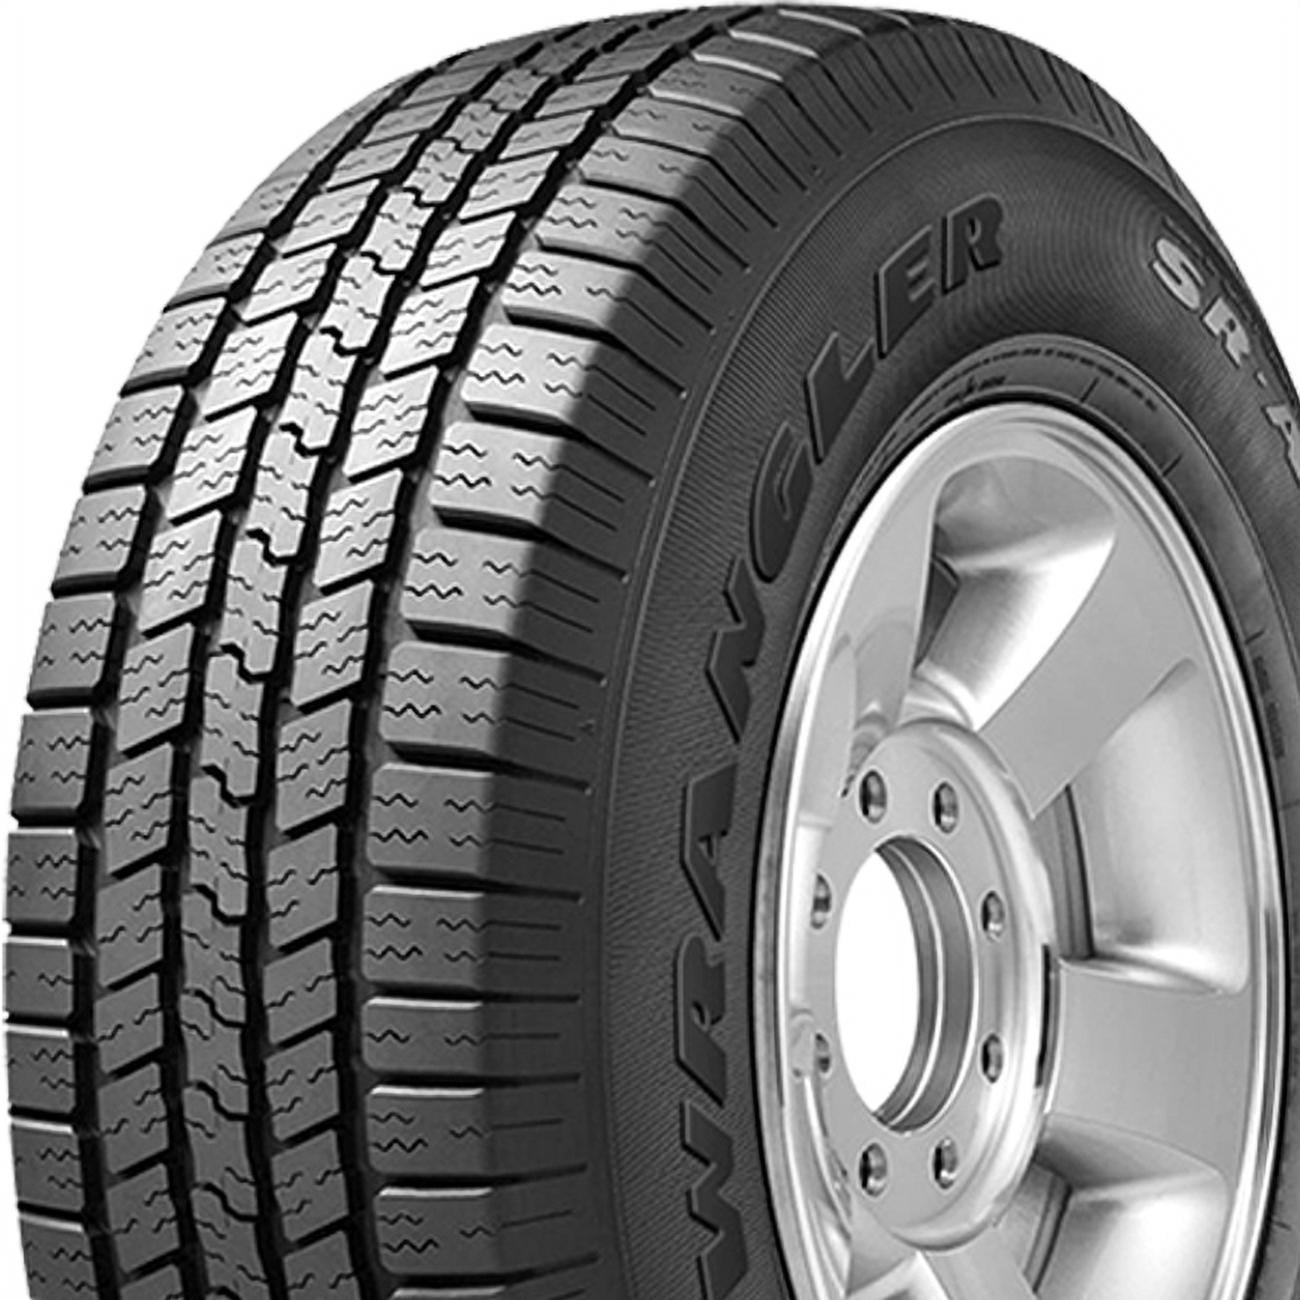 265/70R17 113R Goodyear Wrangler SR-A All-Season Radial Tire 